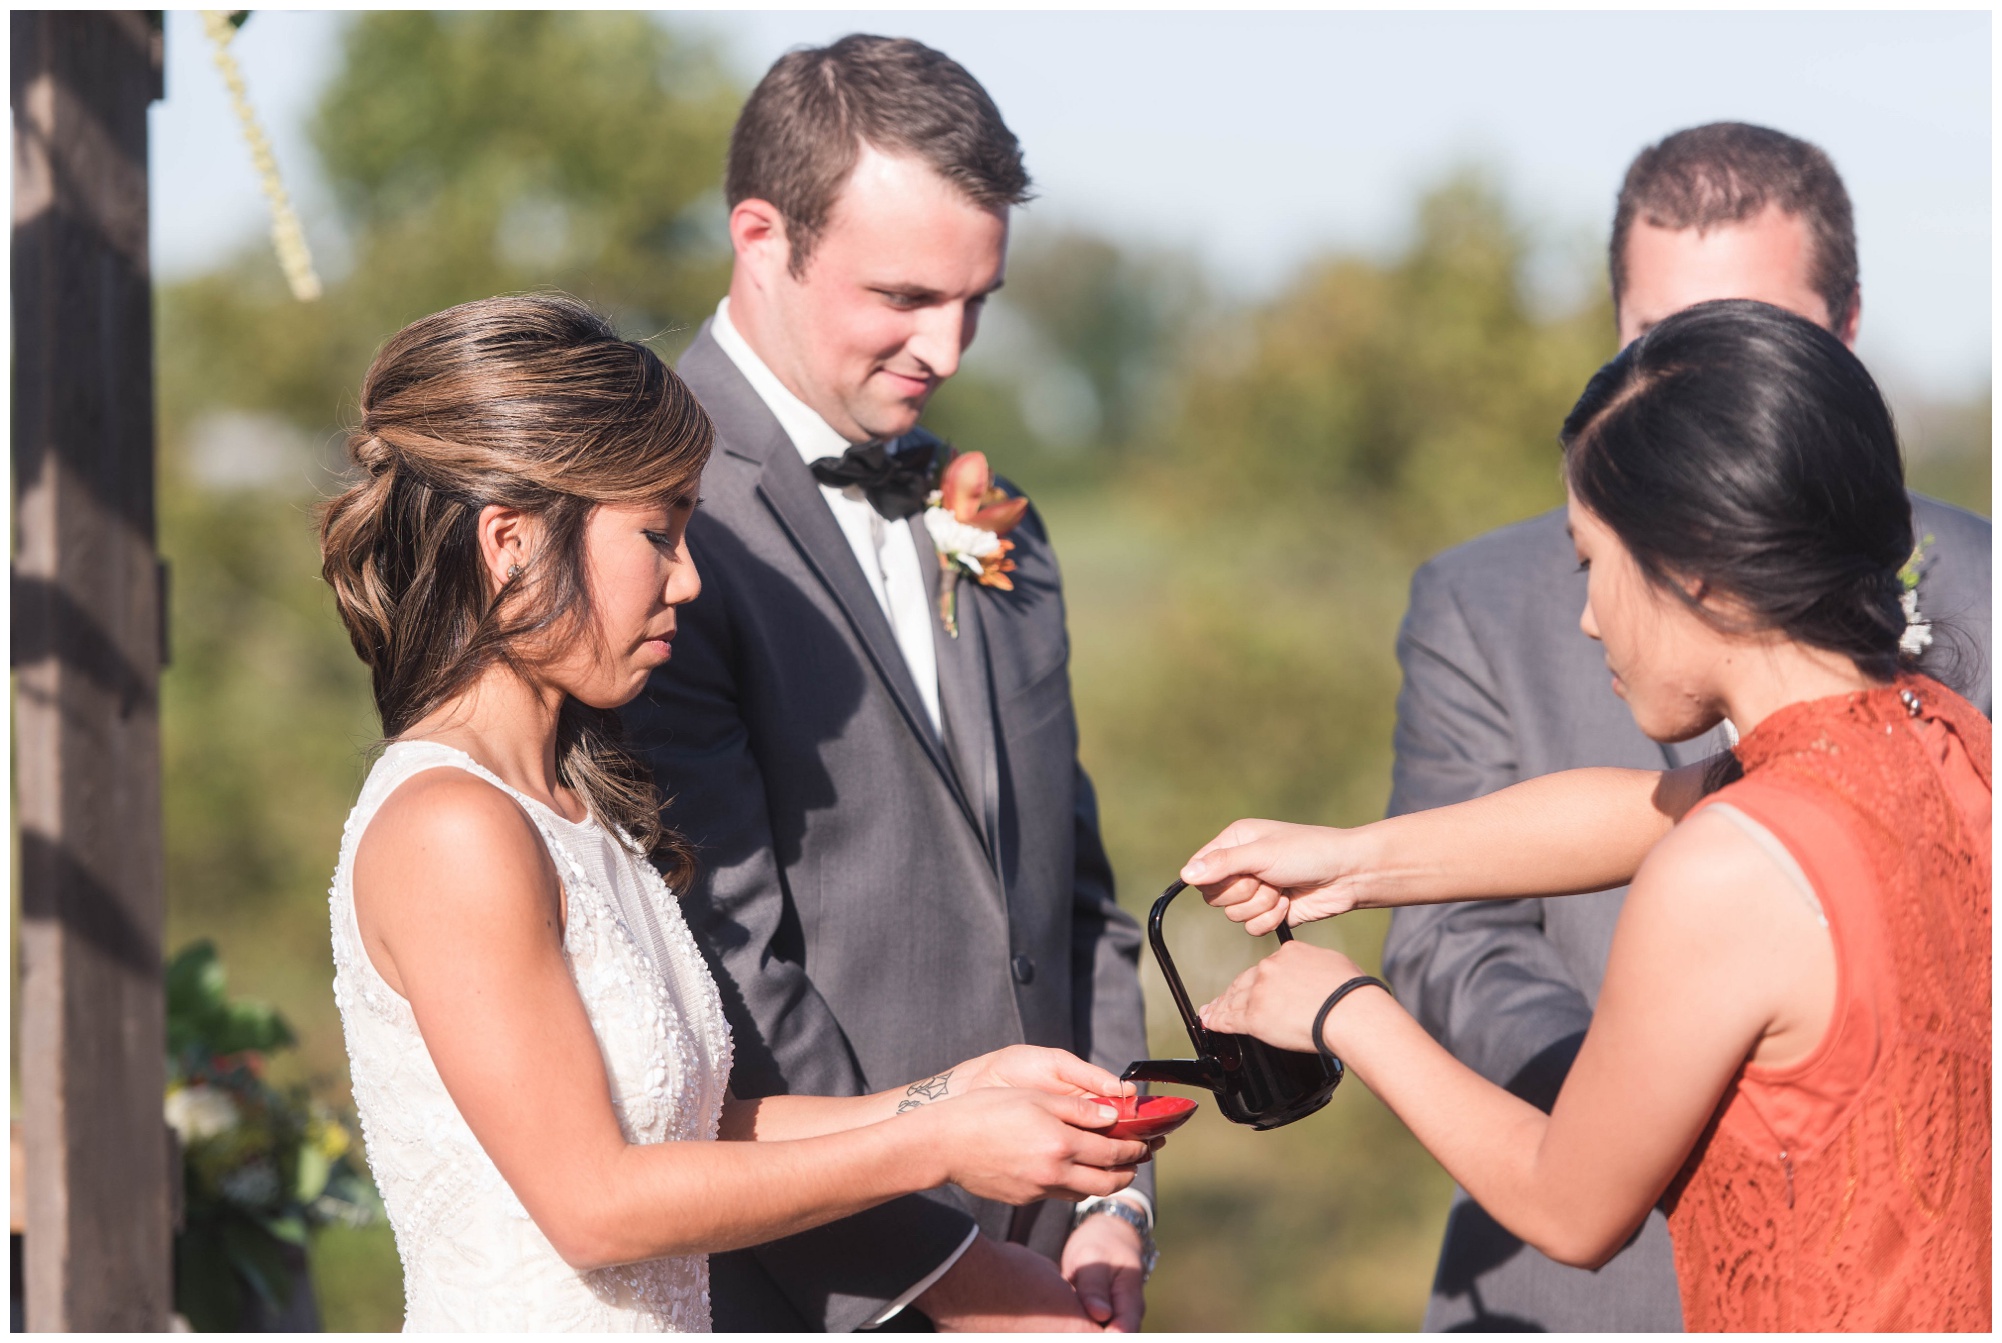 Molon Lave Vineyard Wedding in Central Virginia Photos